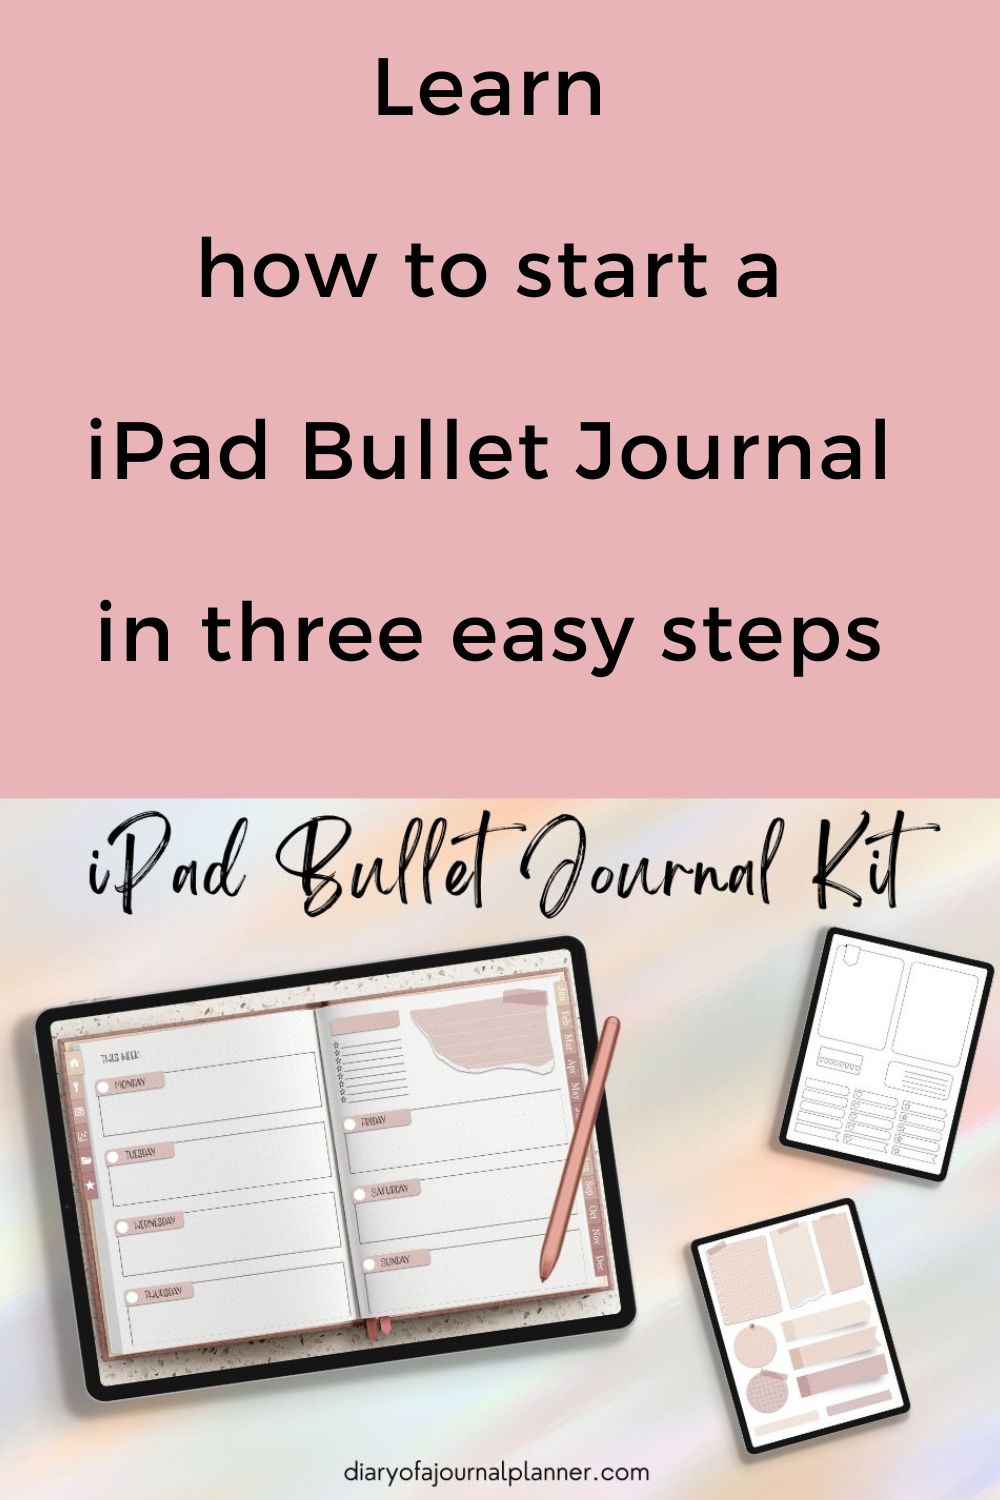 Digital Bullet Journaling With iPad